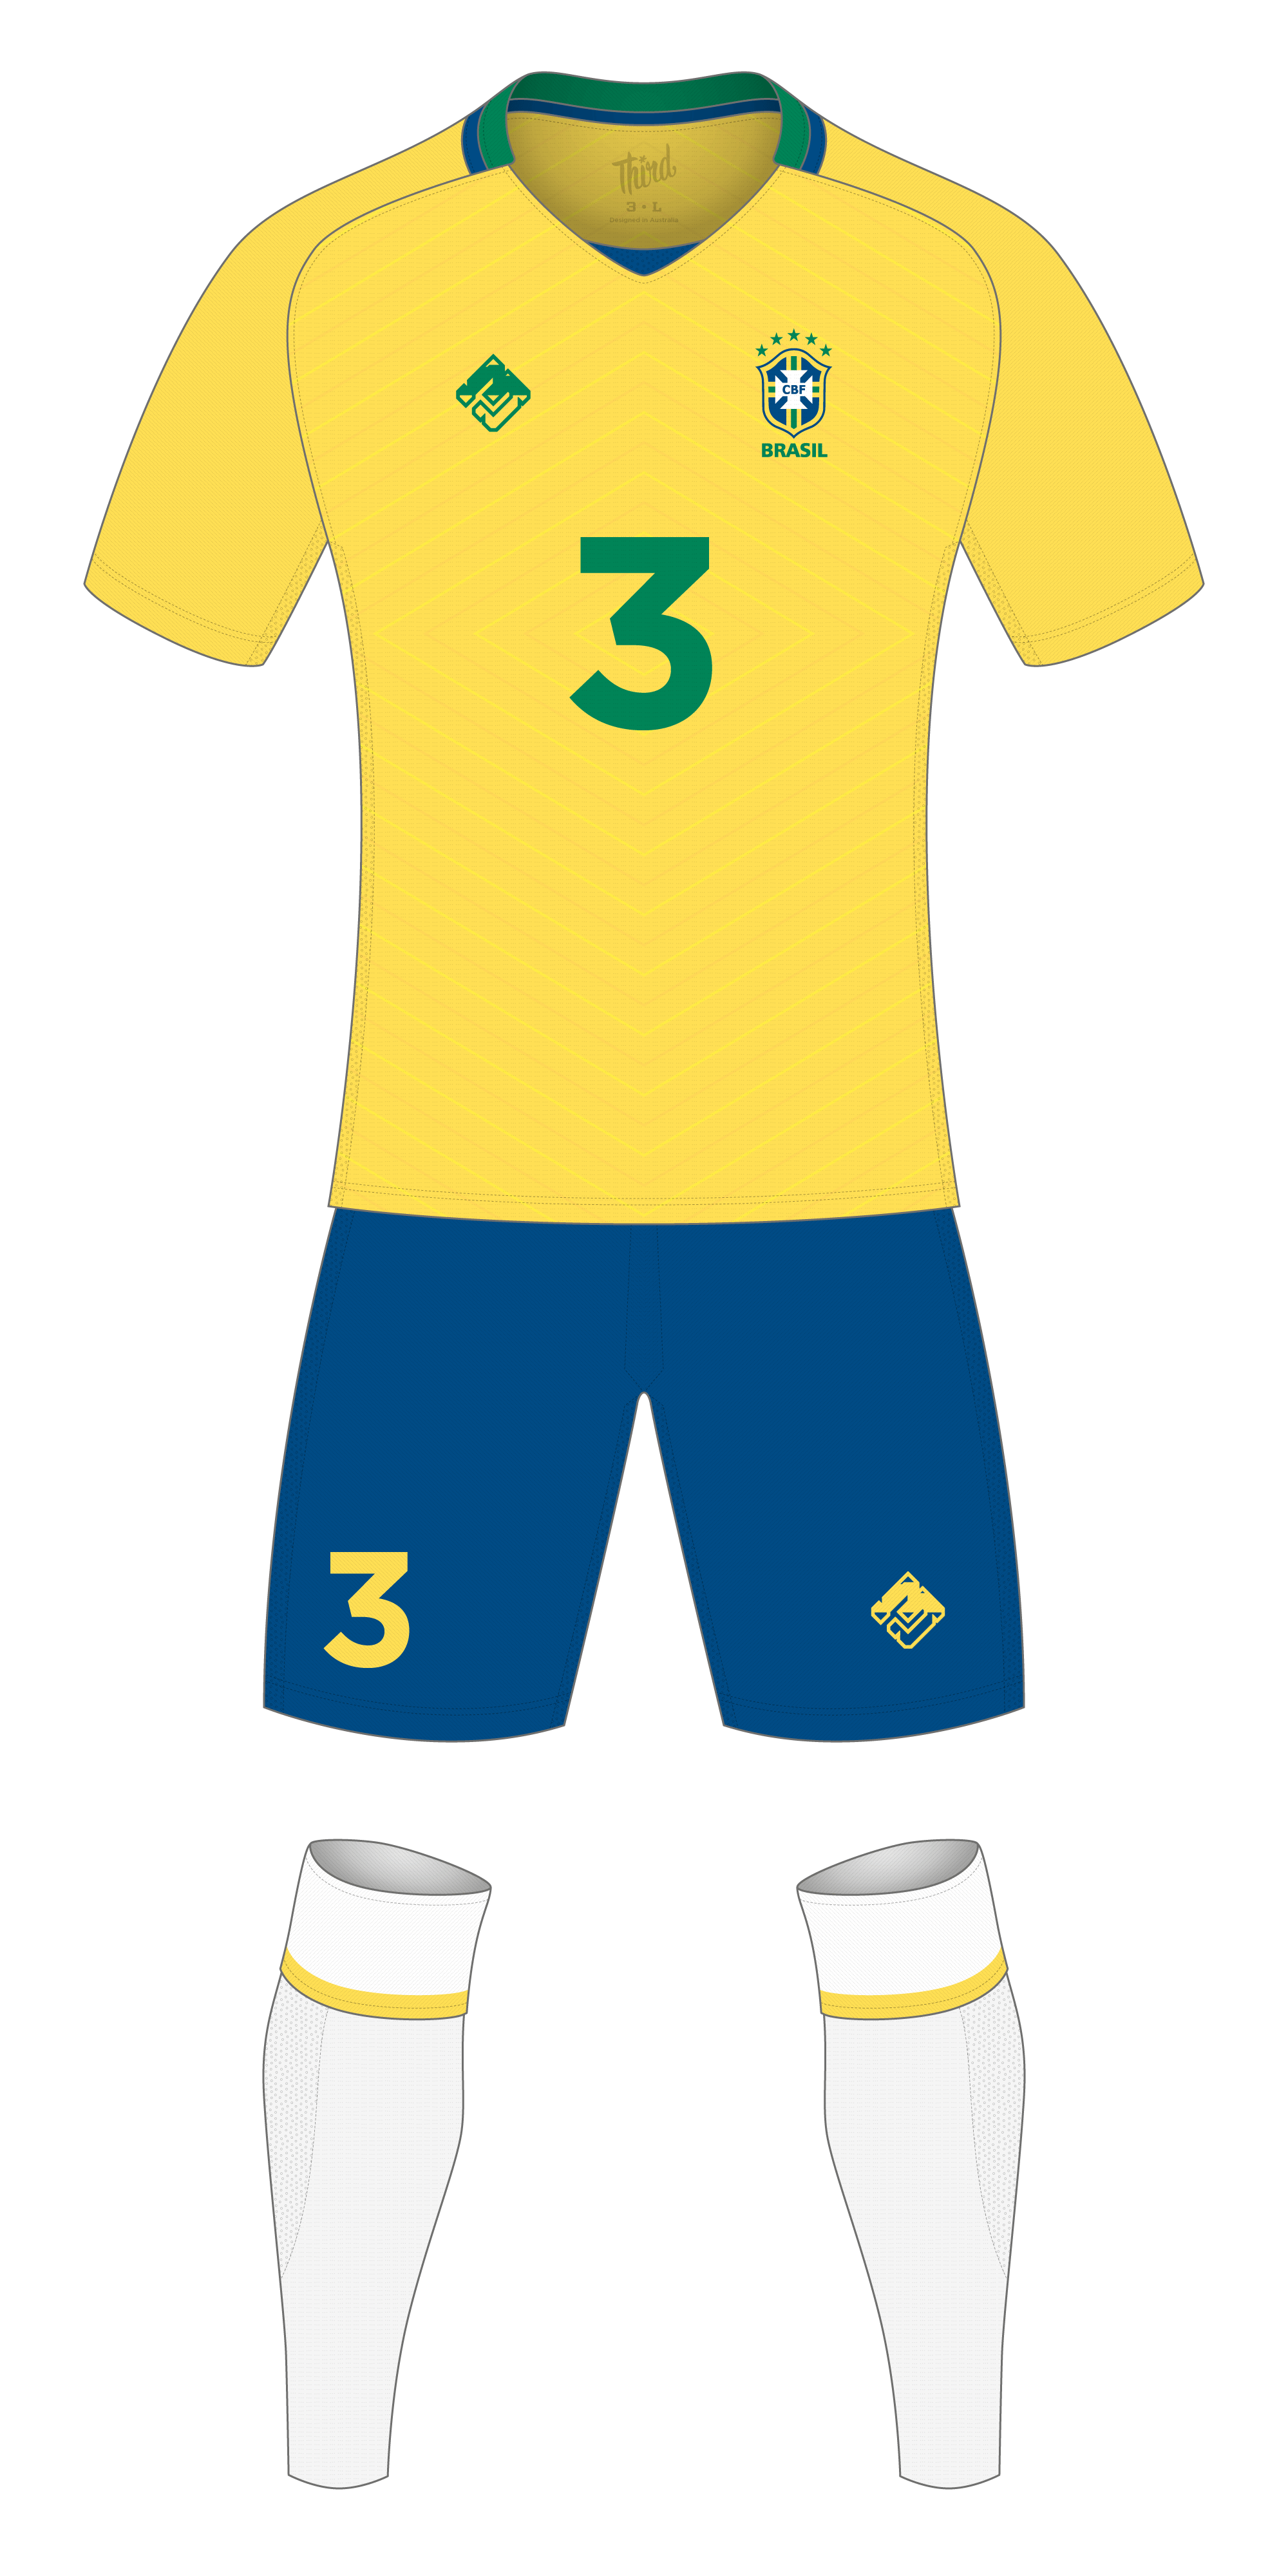 Brazil World Cup 2018 concept — Third Sports Design by Dean Robinson